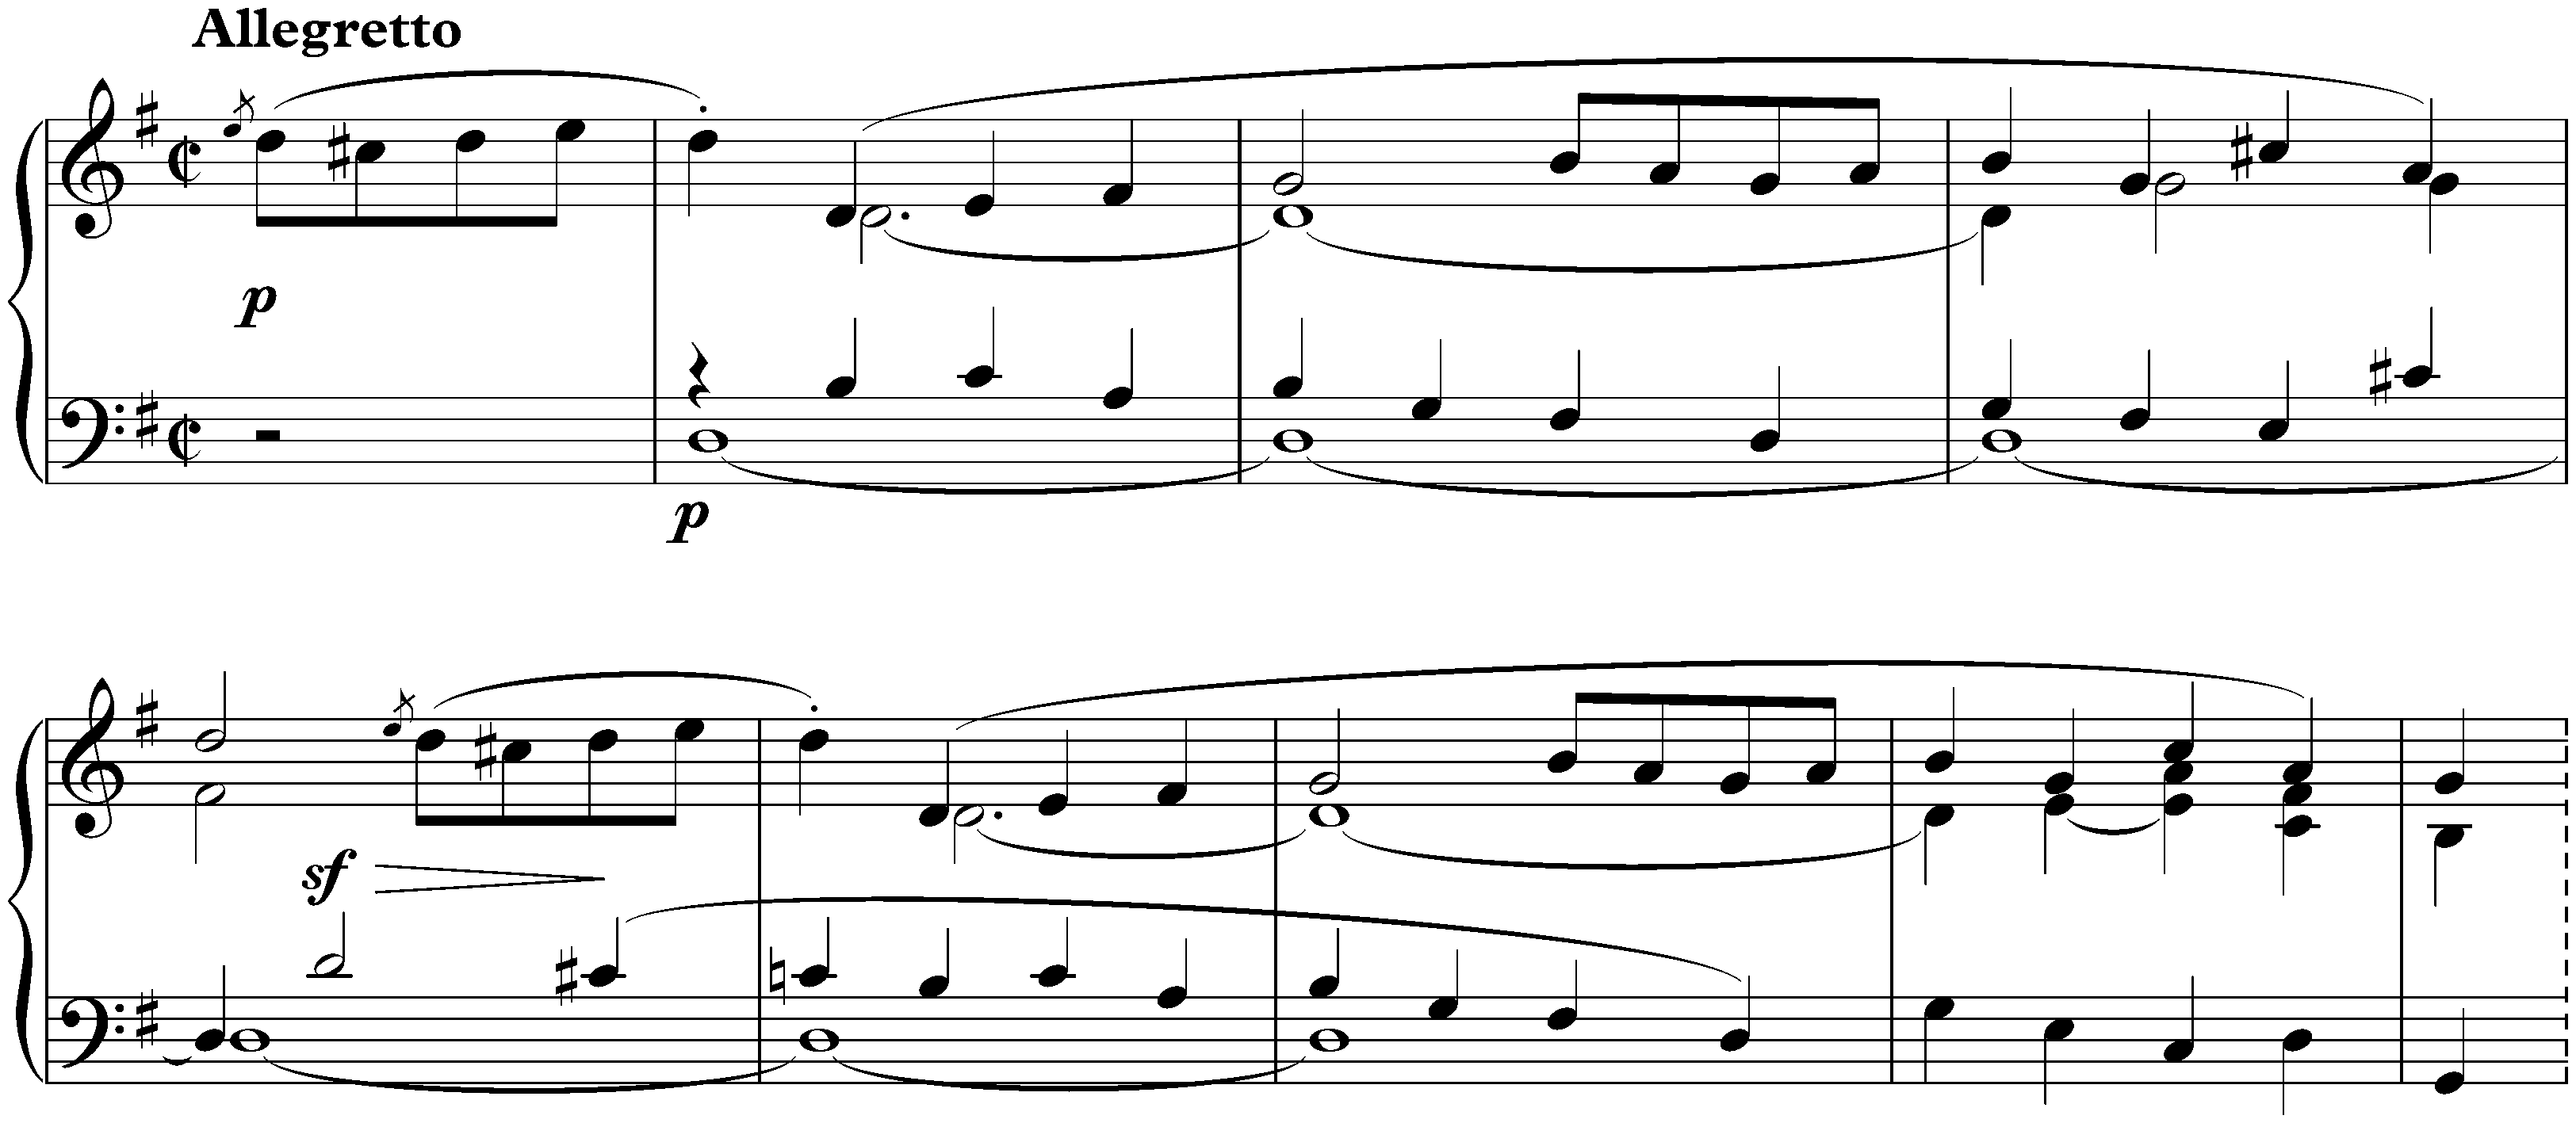 Sonata no. 16 in G major, op. 31 no. 1; 3. Rondo: Allegretto